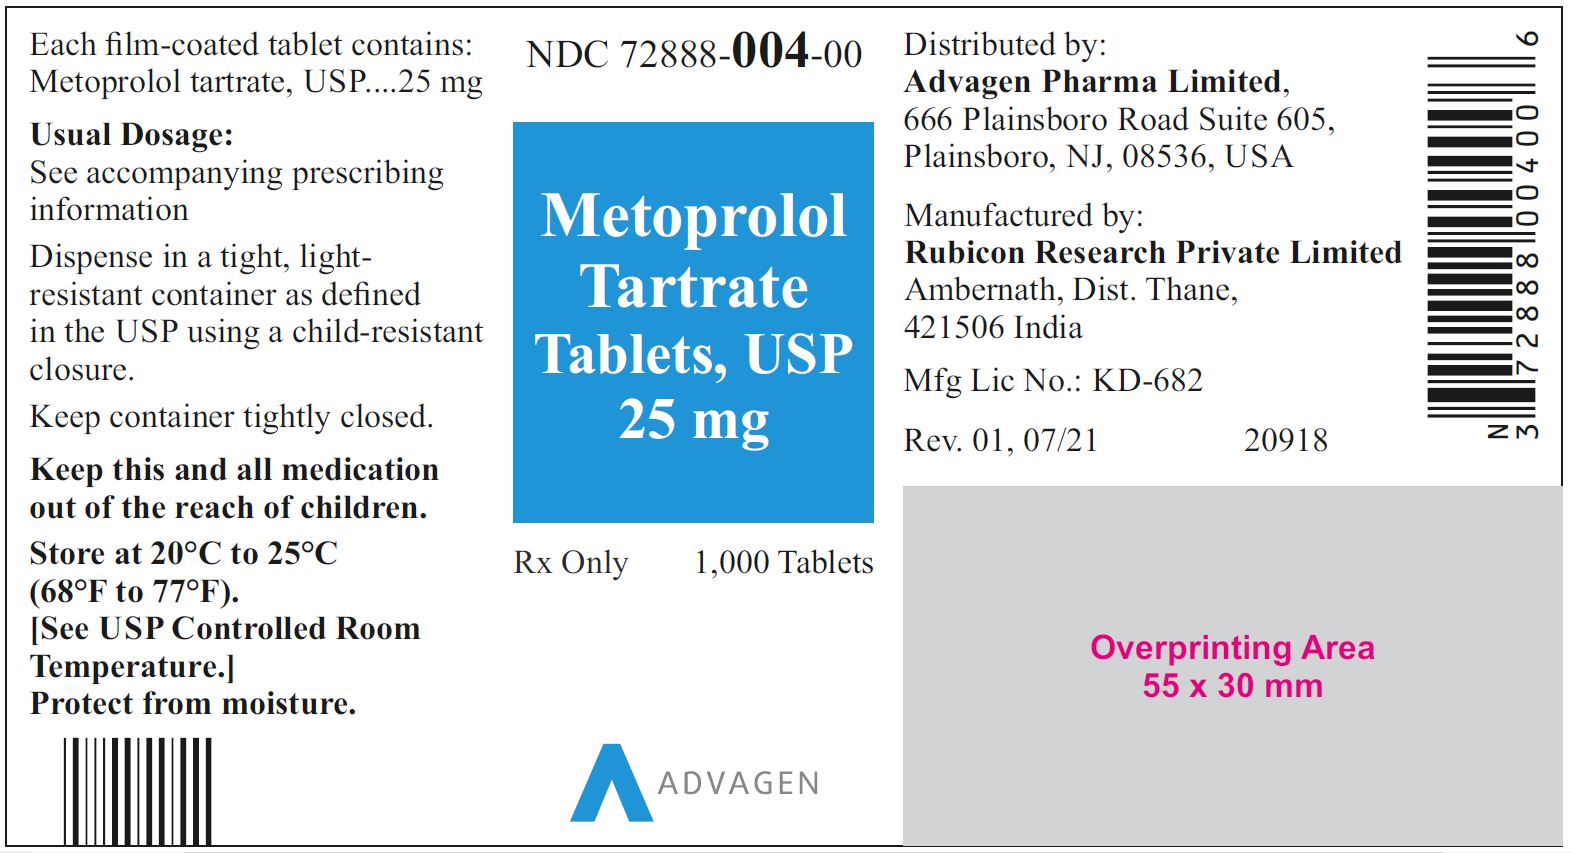 NDC: <a href=/NDC/72888-004-00>72888-004-00</a> - Metoprolol Tartrate Tablets, USP 25 mg - 1000 Tablets